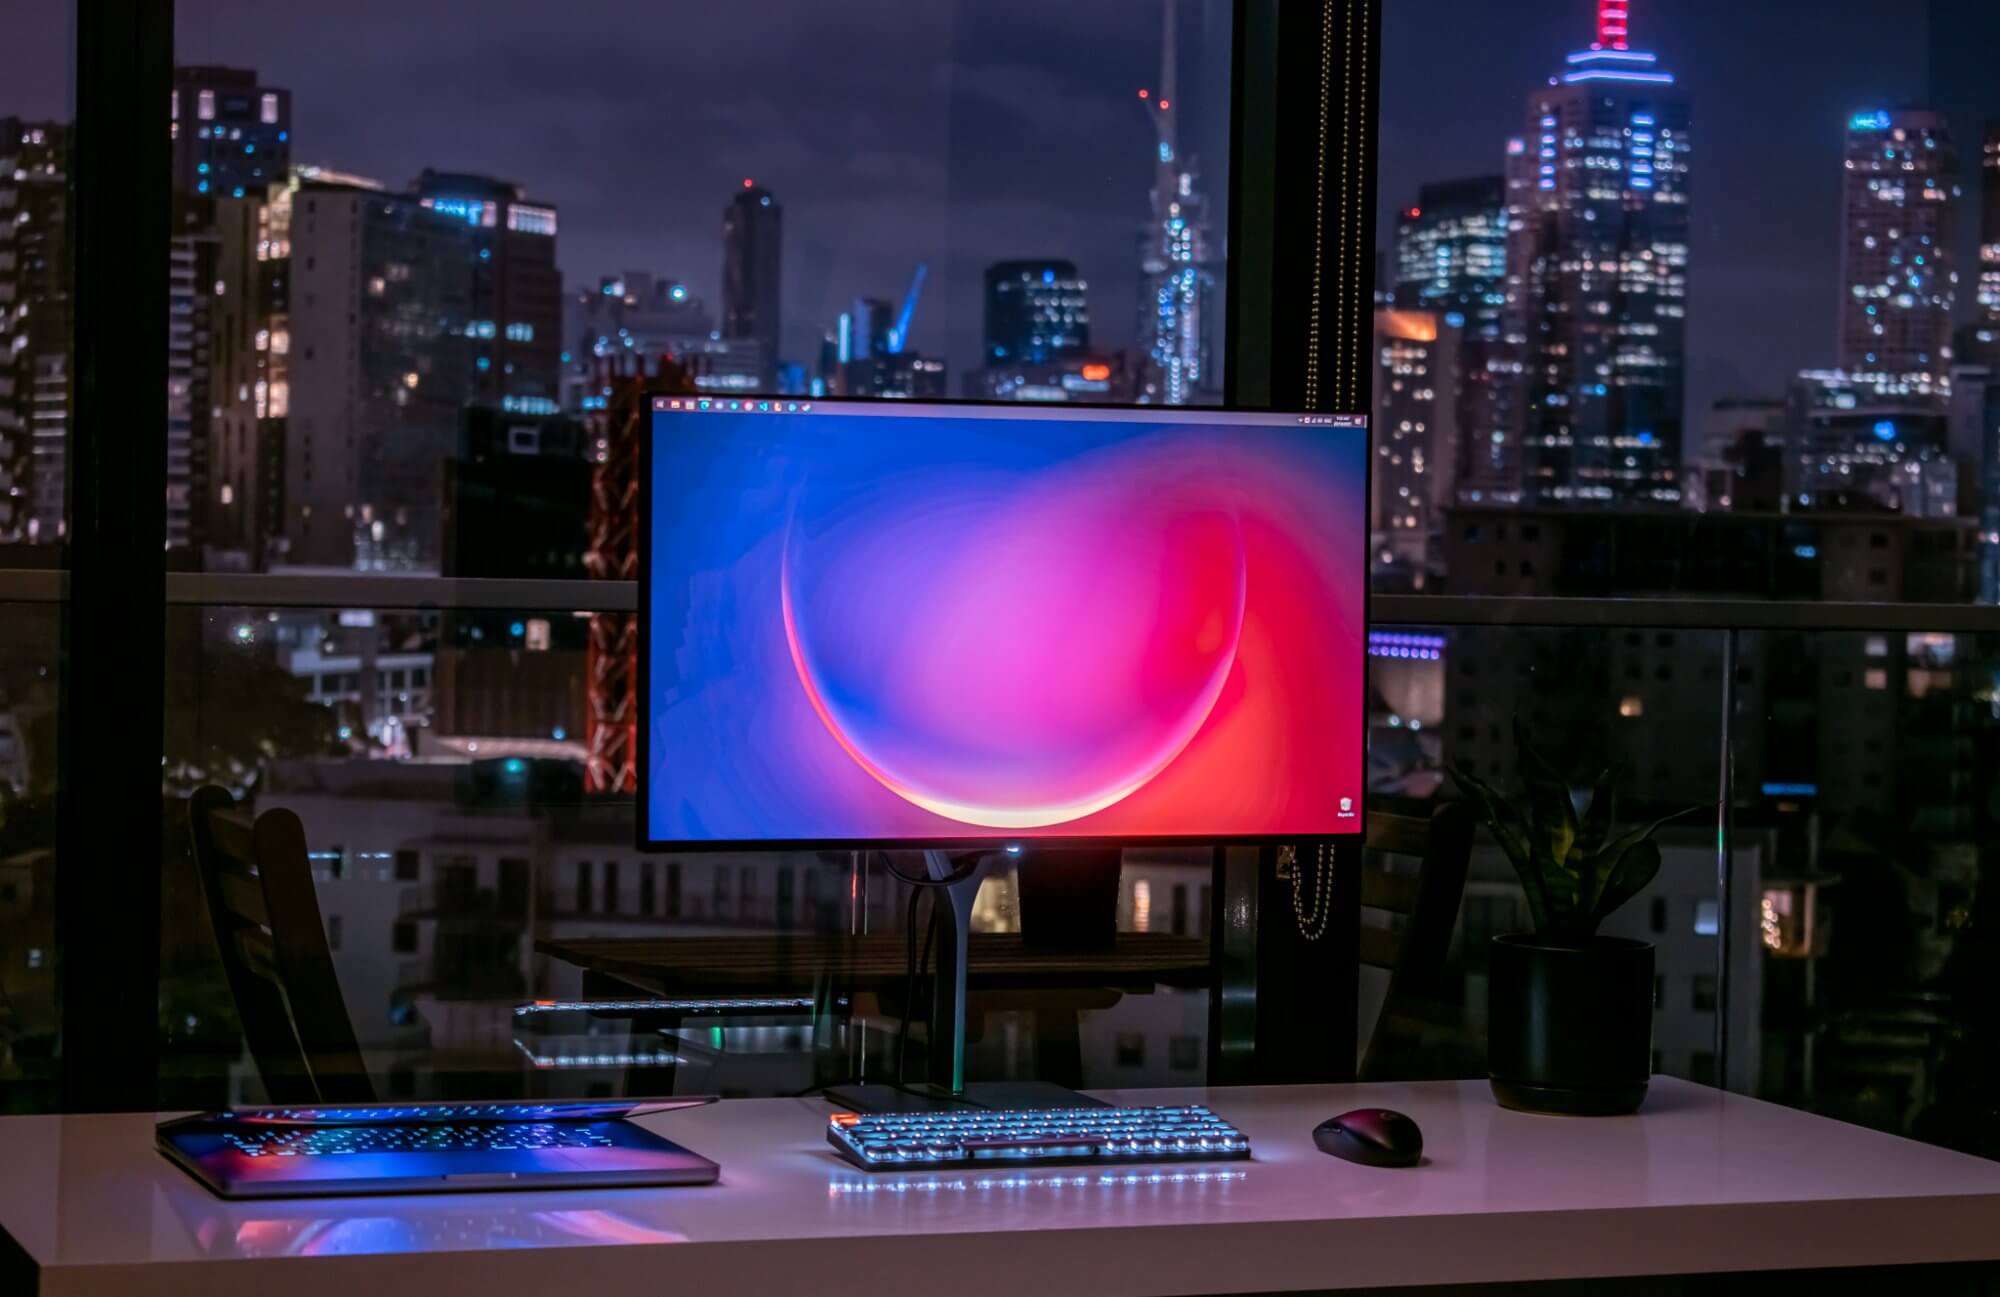 A night view of the minimalist desk setup